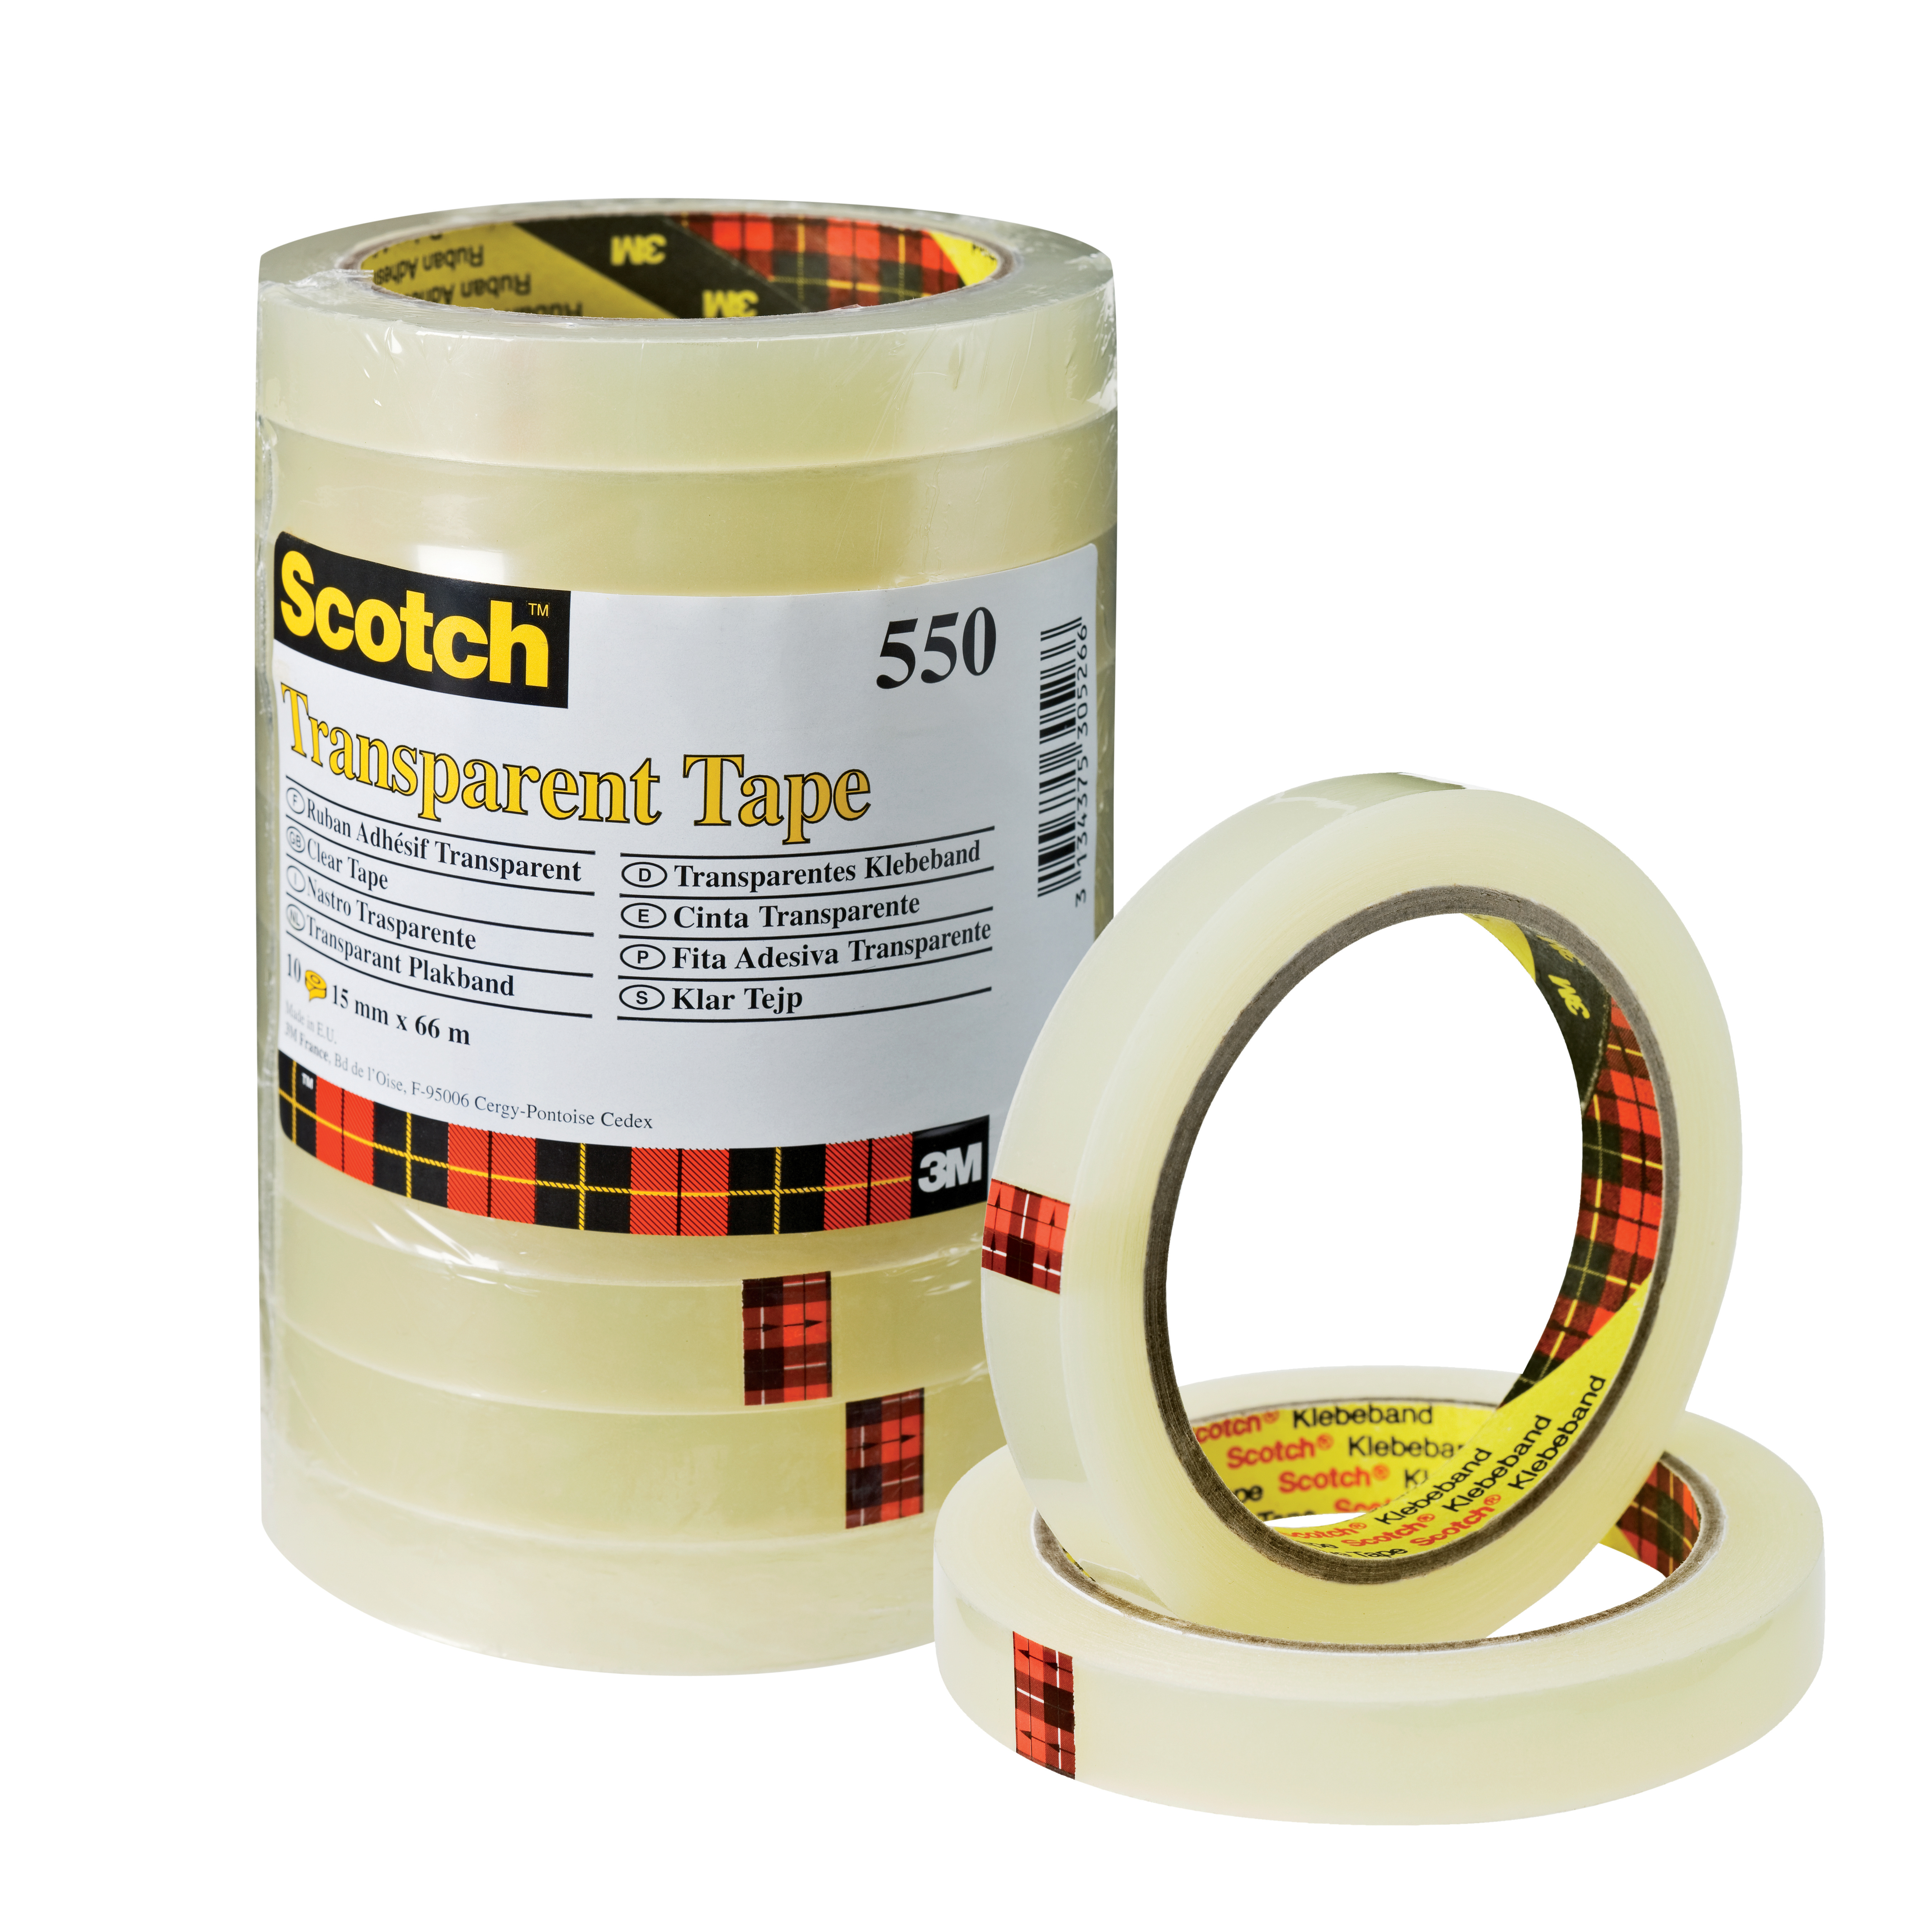 SCOTCH Transparent Tape 550 15mmx66m 550/1566 10 pcs.